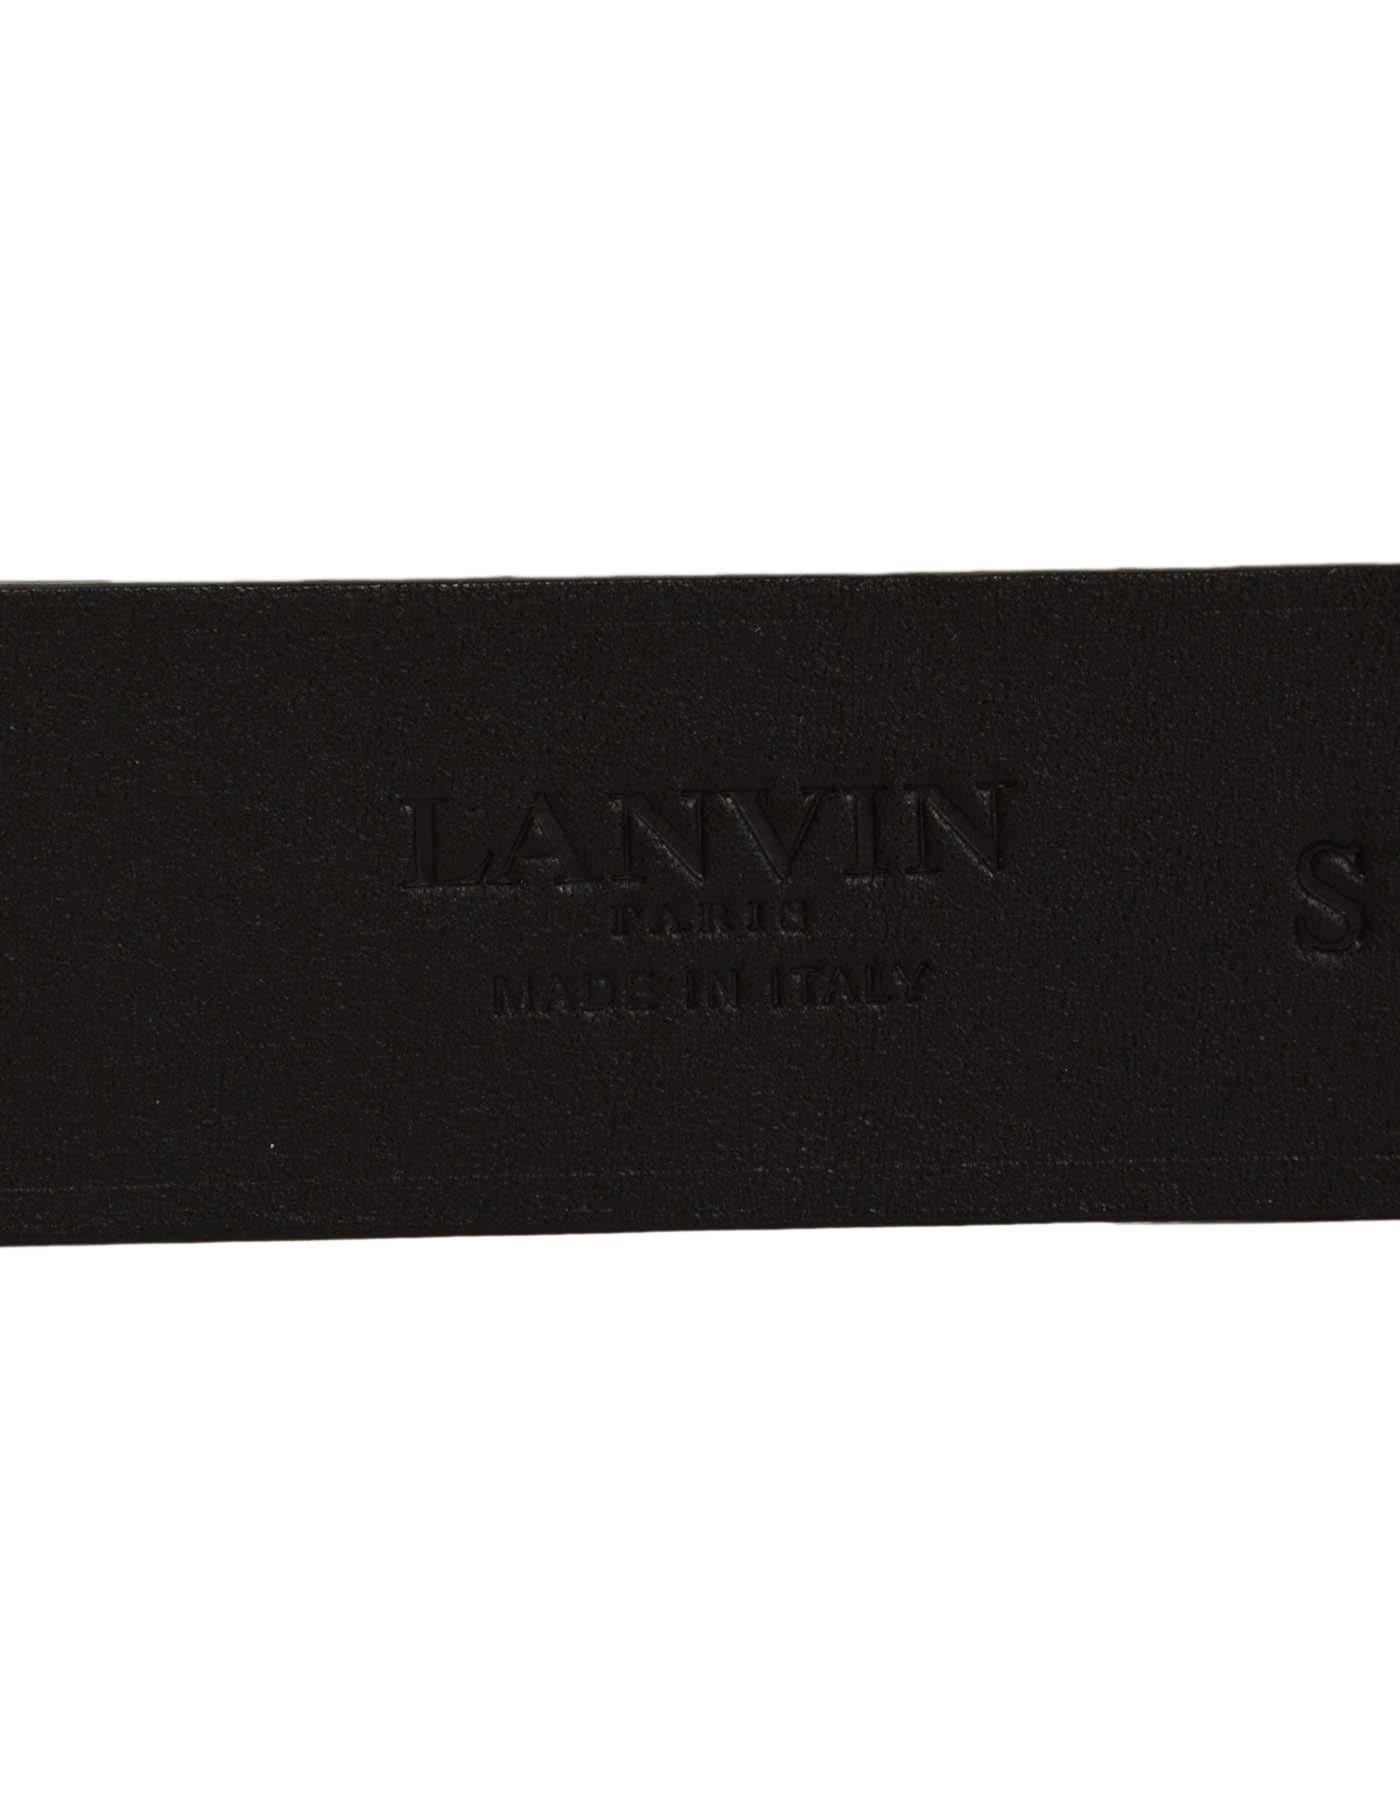 Lanvin Black & White Patent Belt sz S rt. $495 1